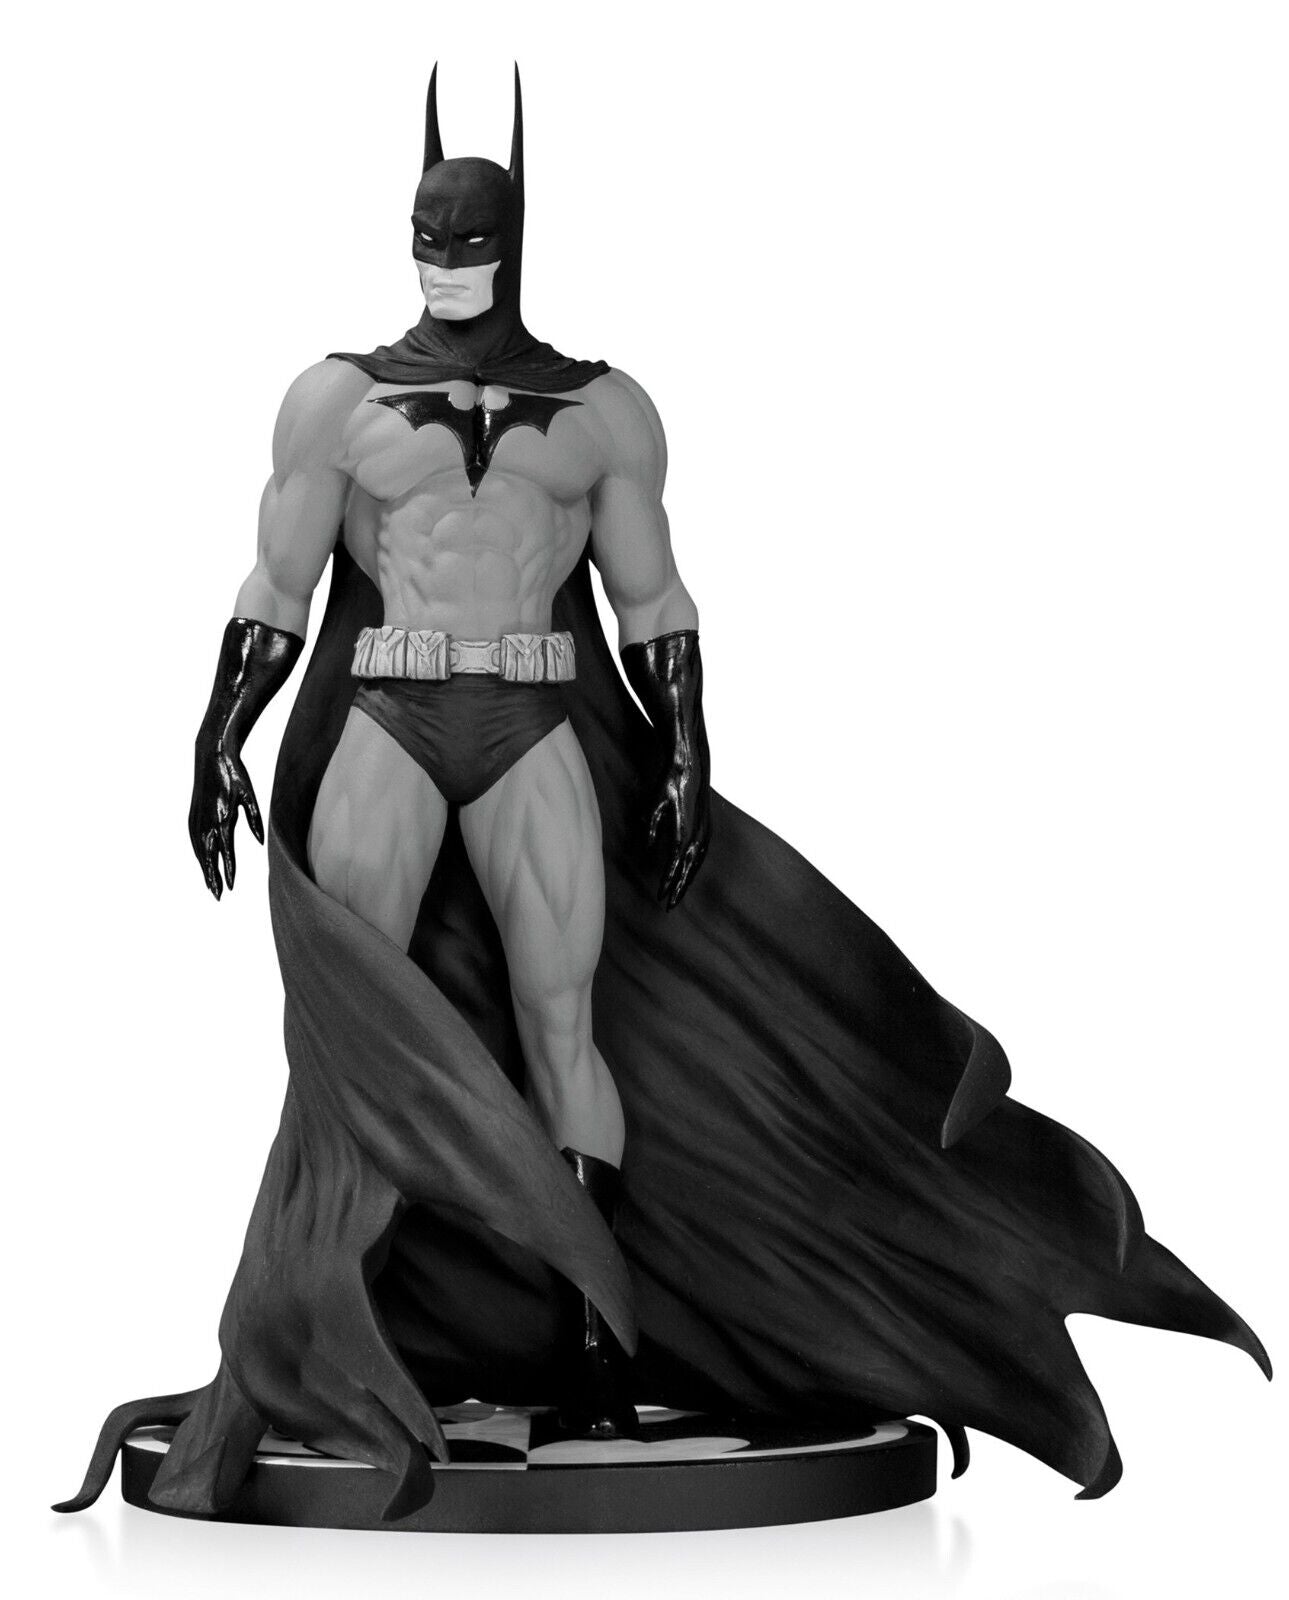 Batman Black & White statue by Michael Turner